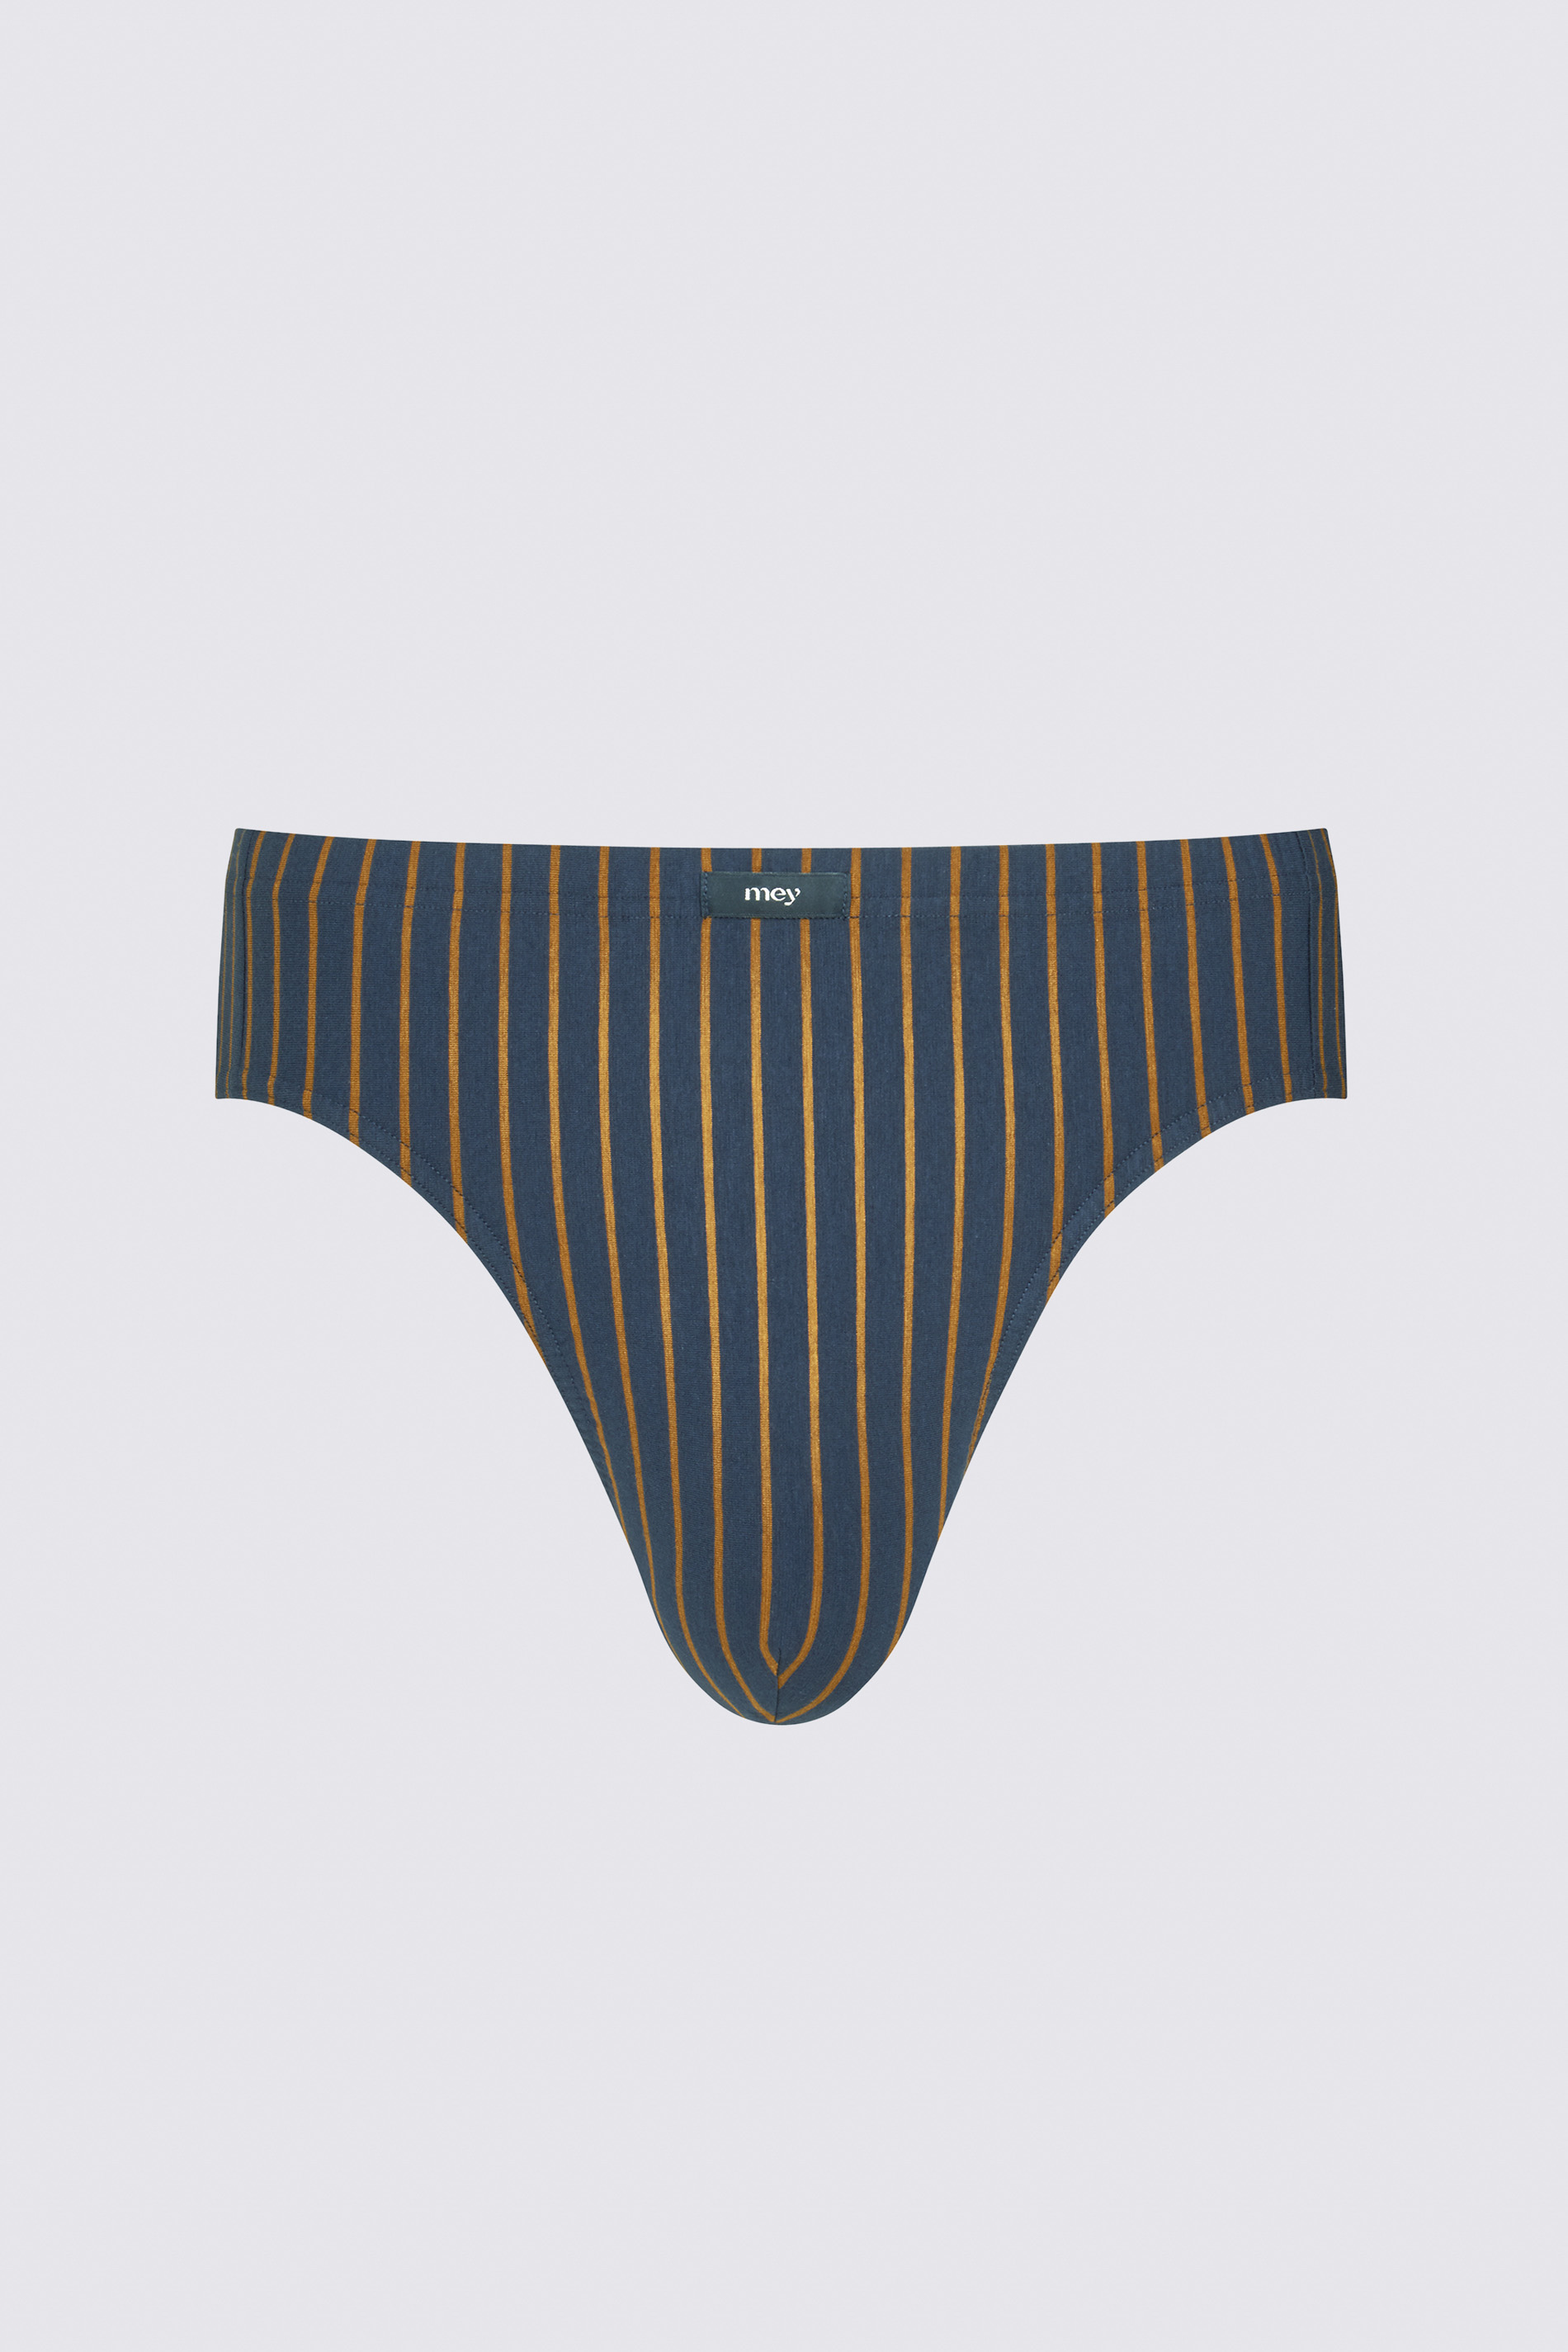 Jazz-pants Yacht Blue Serie Bi Col Stripes Uitknippen | mey®